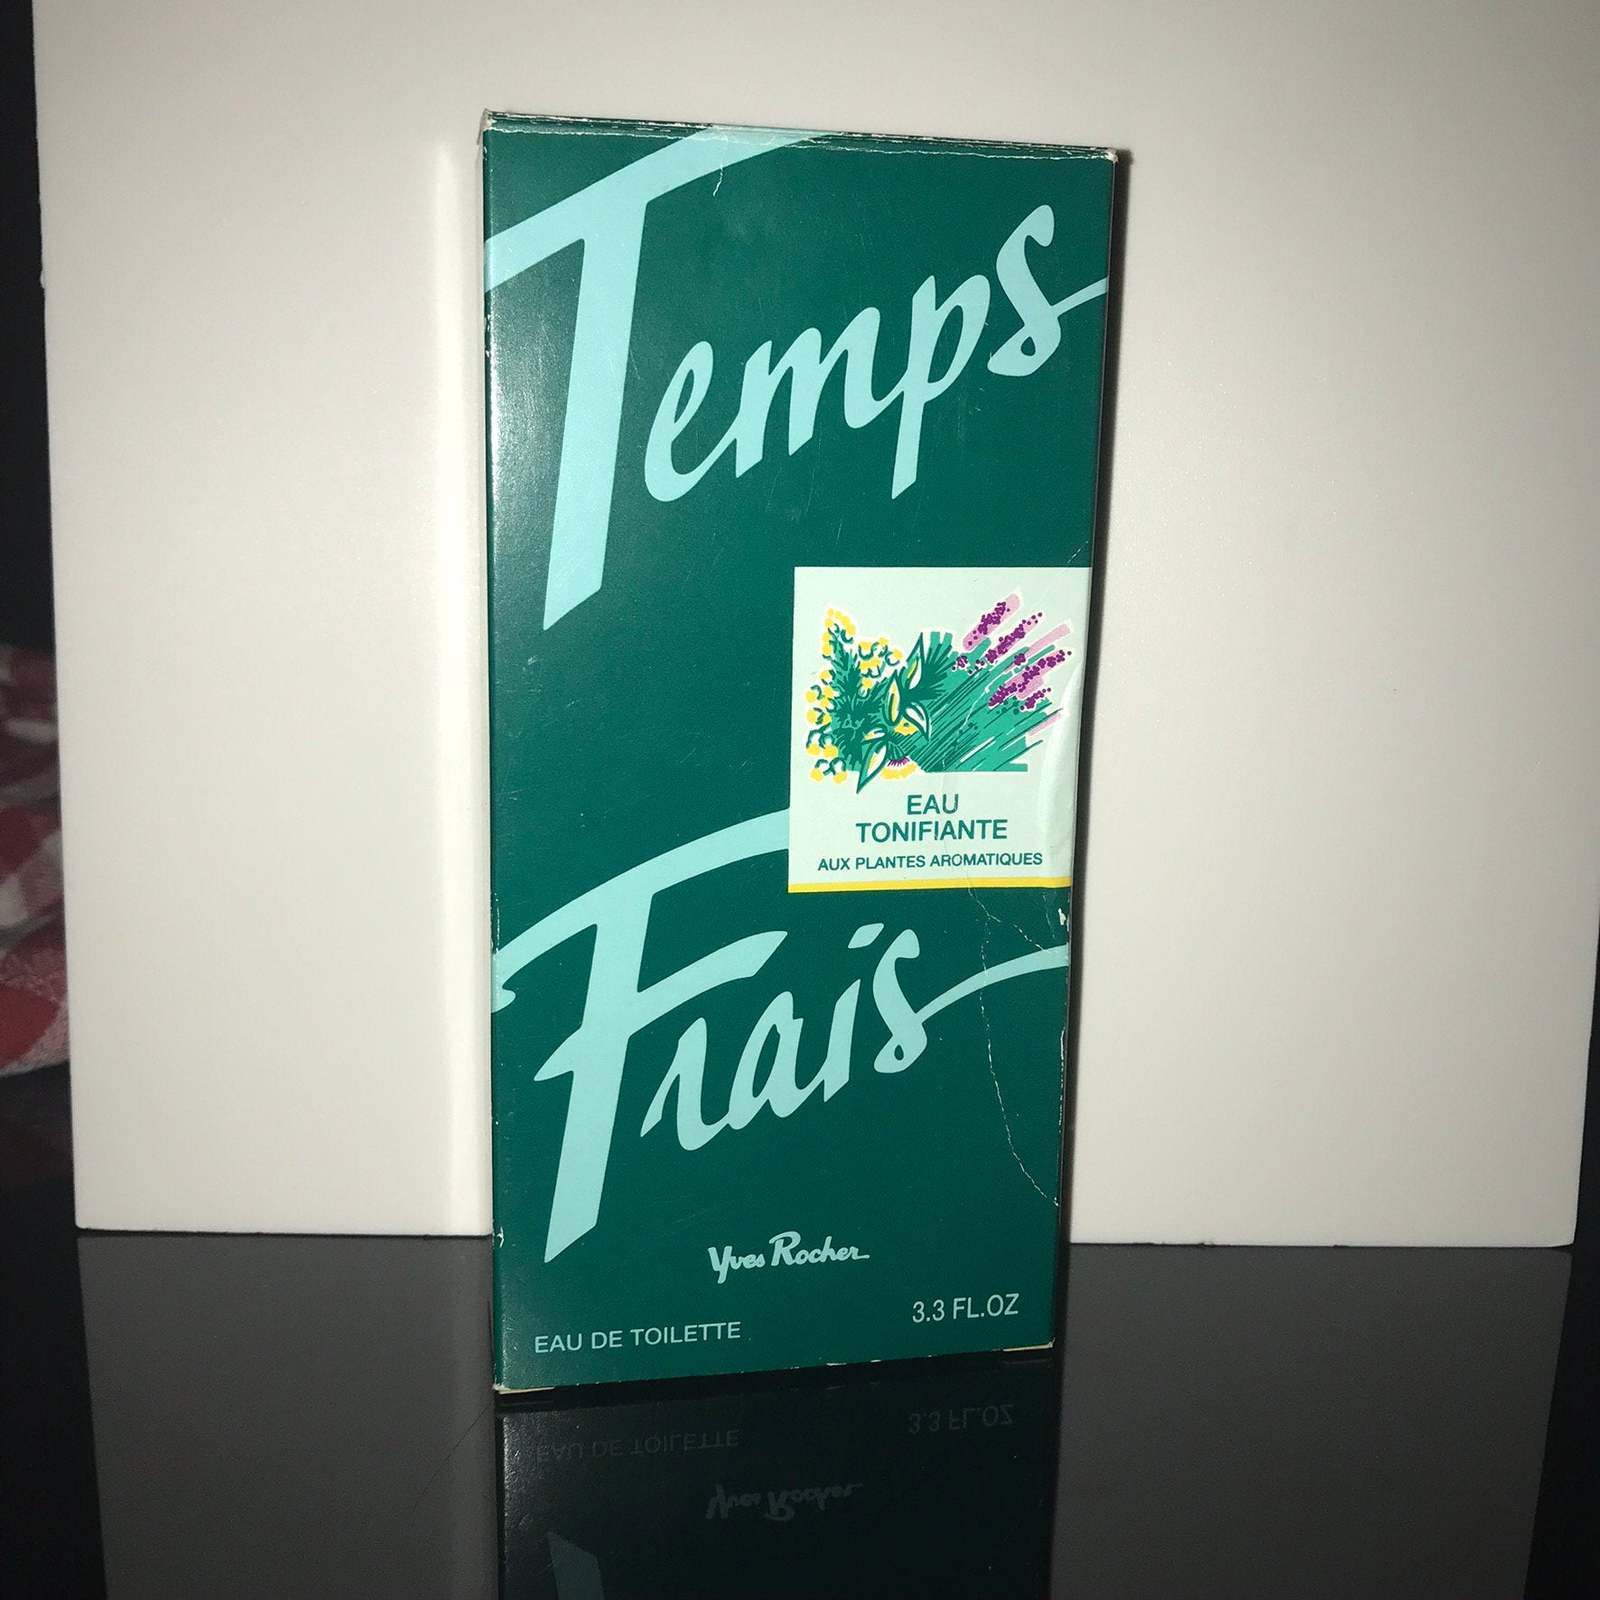 Yves Rocher - Temps Frais - Eau de Toilette - 100 ml - Spray - VINTAGE RARE - $75.00